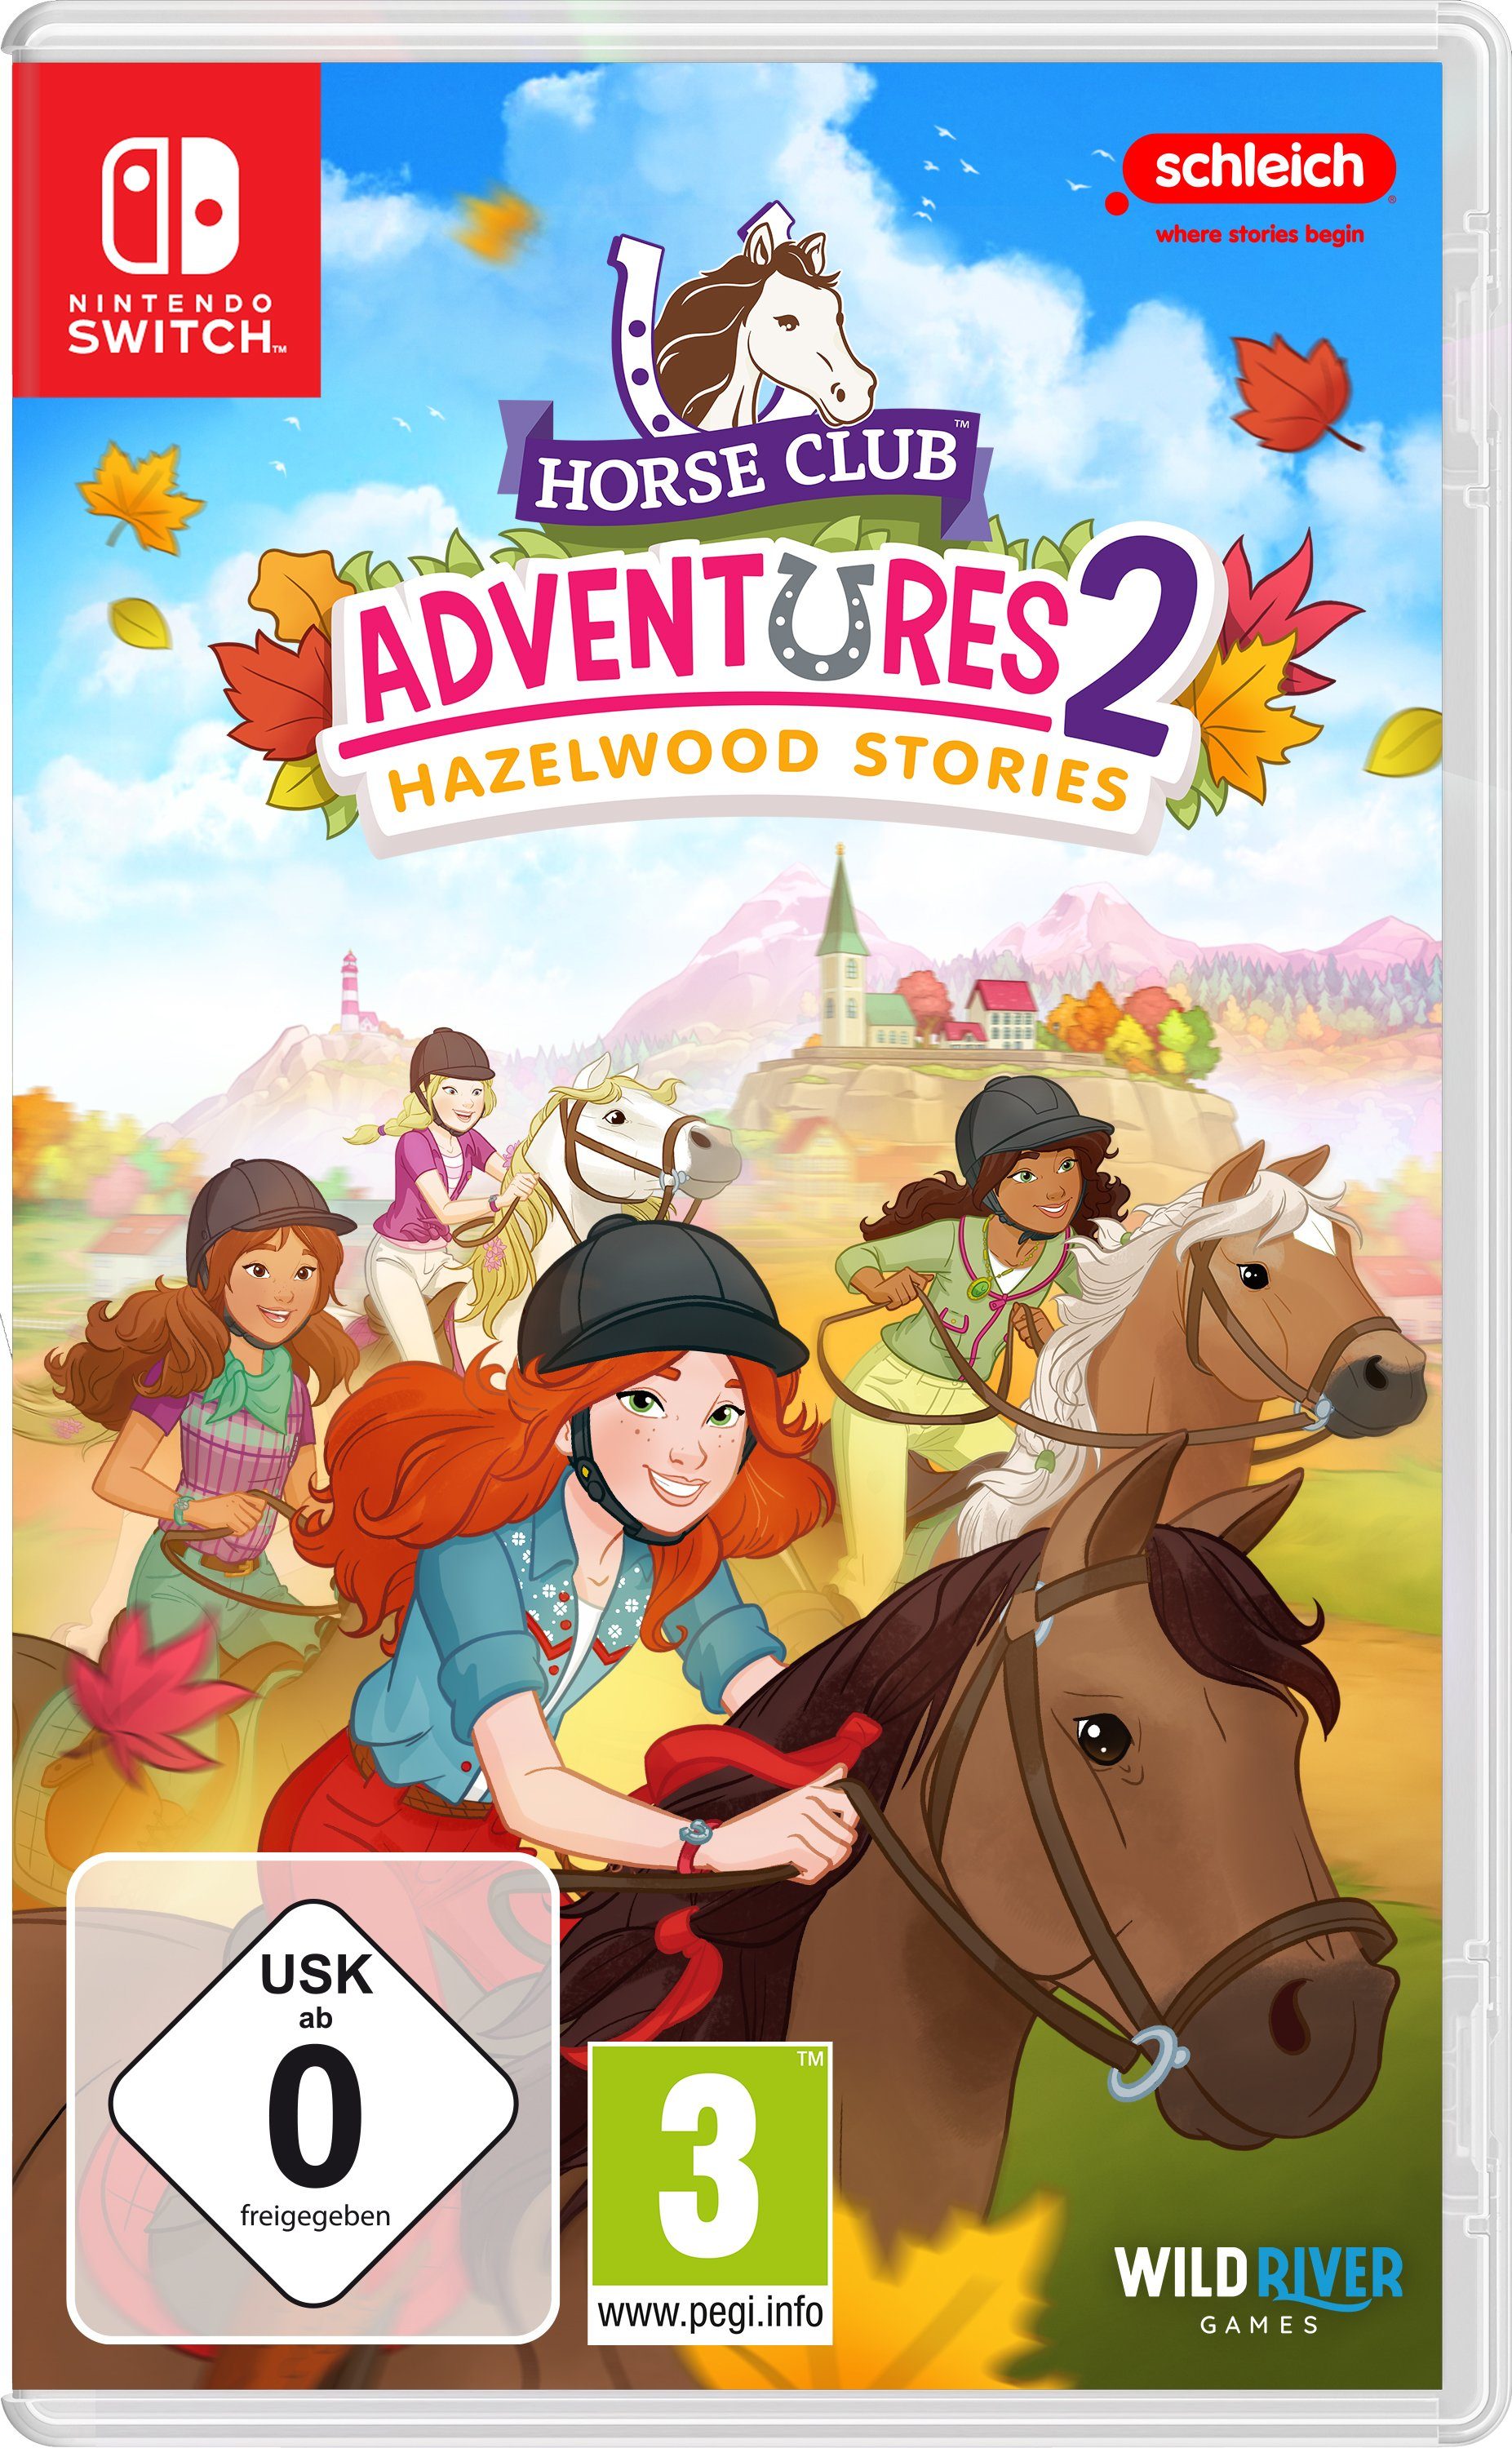 Stories Club Hazelwood Nintendo Switch Adventures Horse 2: